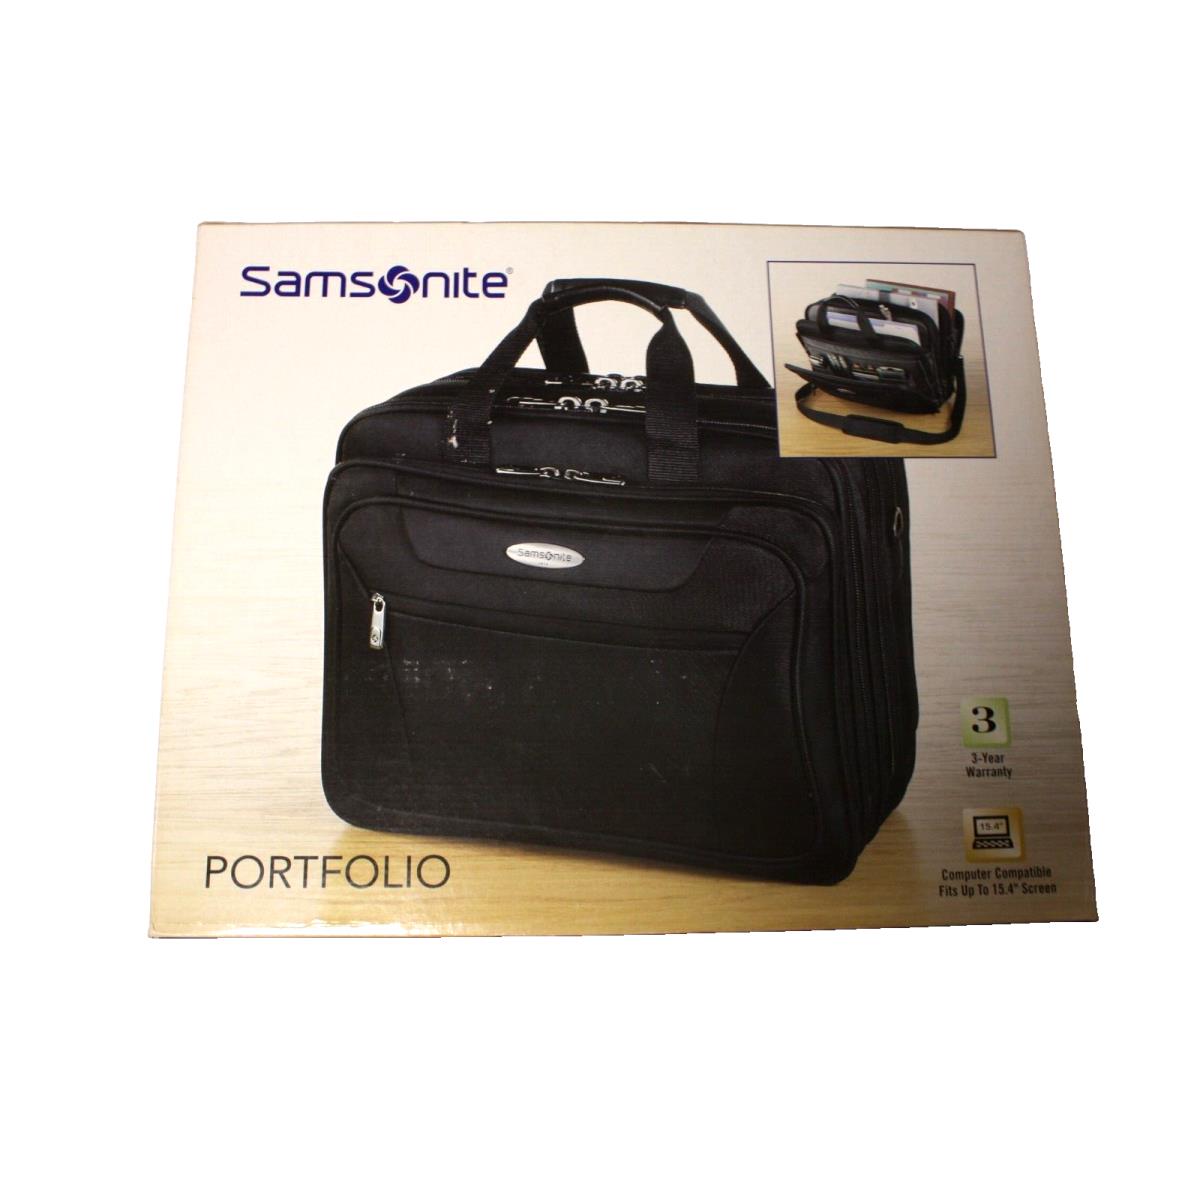 Samsonite Portfolio Computer Case Fits up to 15.4 Screen Model 937005CB